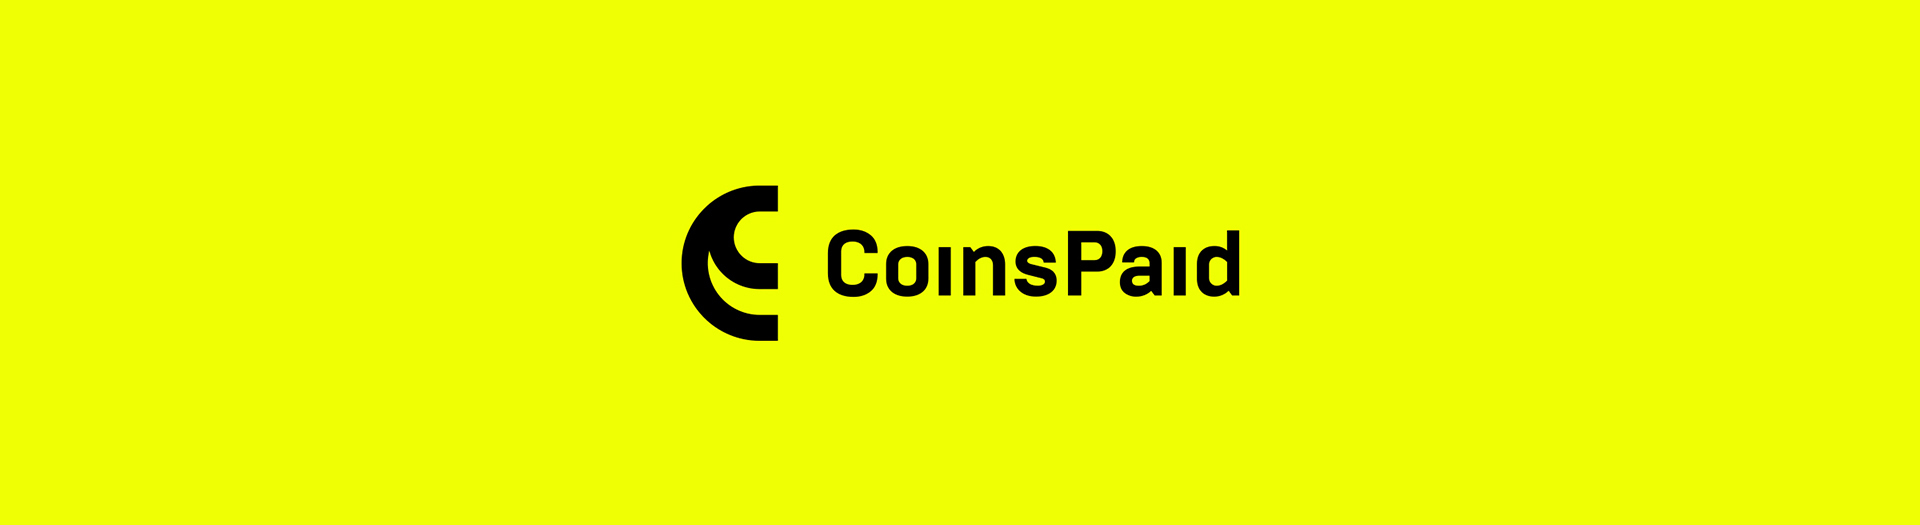 CoinsPaid image